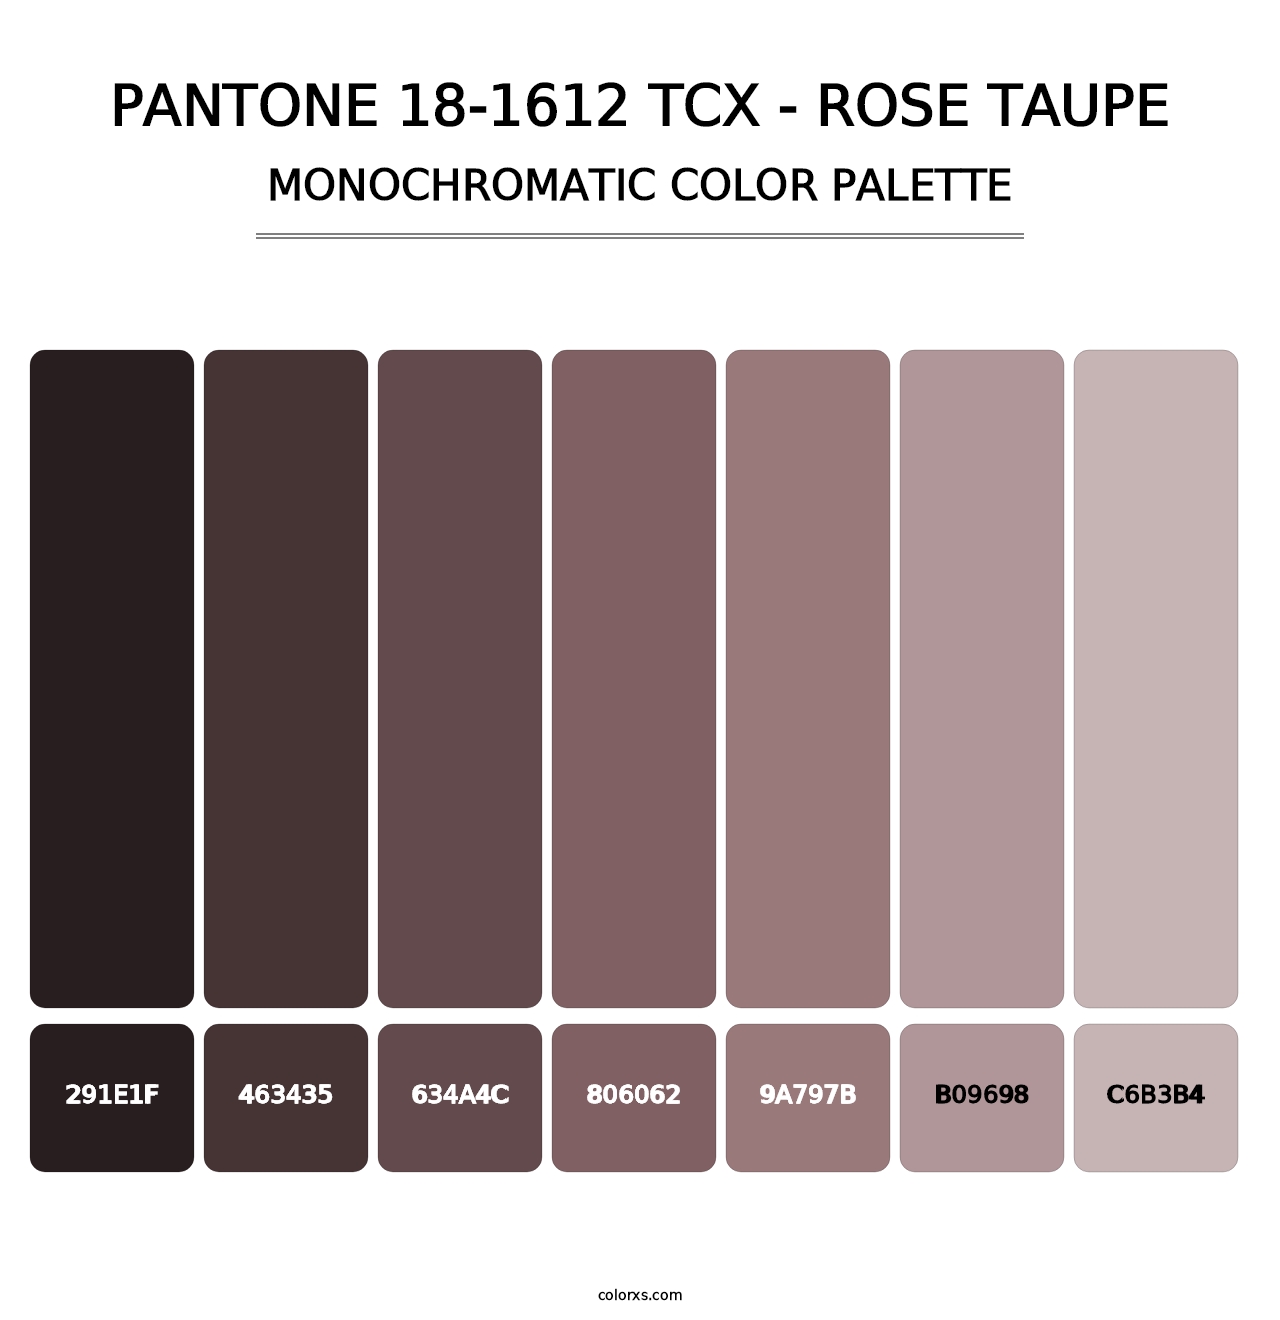 PANTONE 18-1612 TCX - Rose Taupe - Monochromatic Color Palette